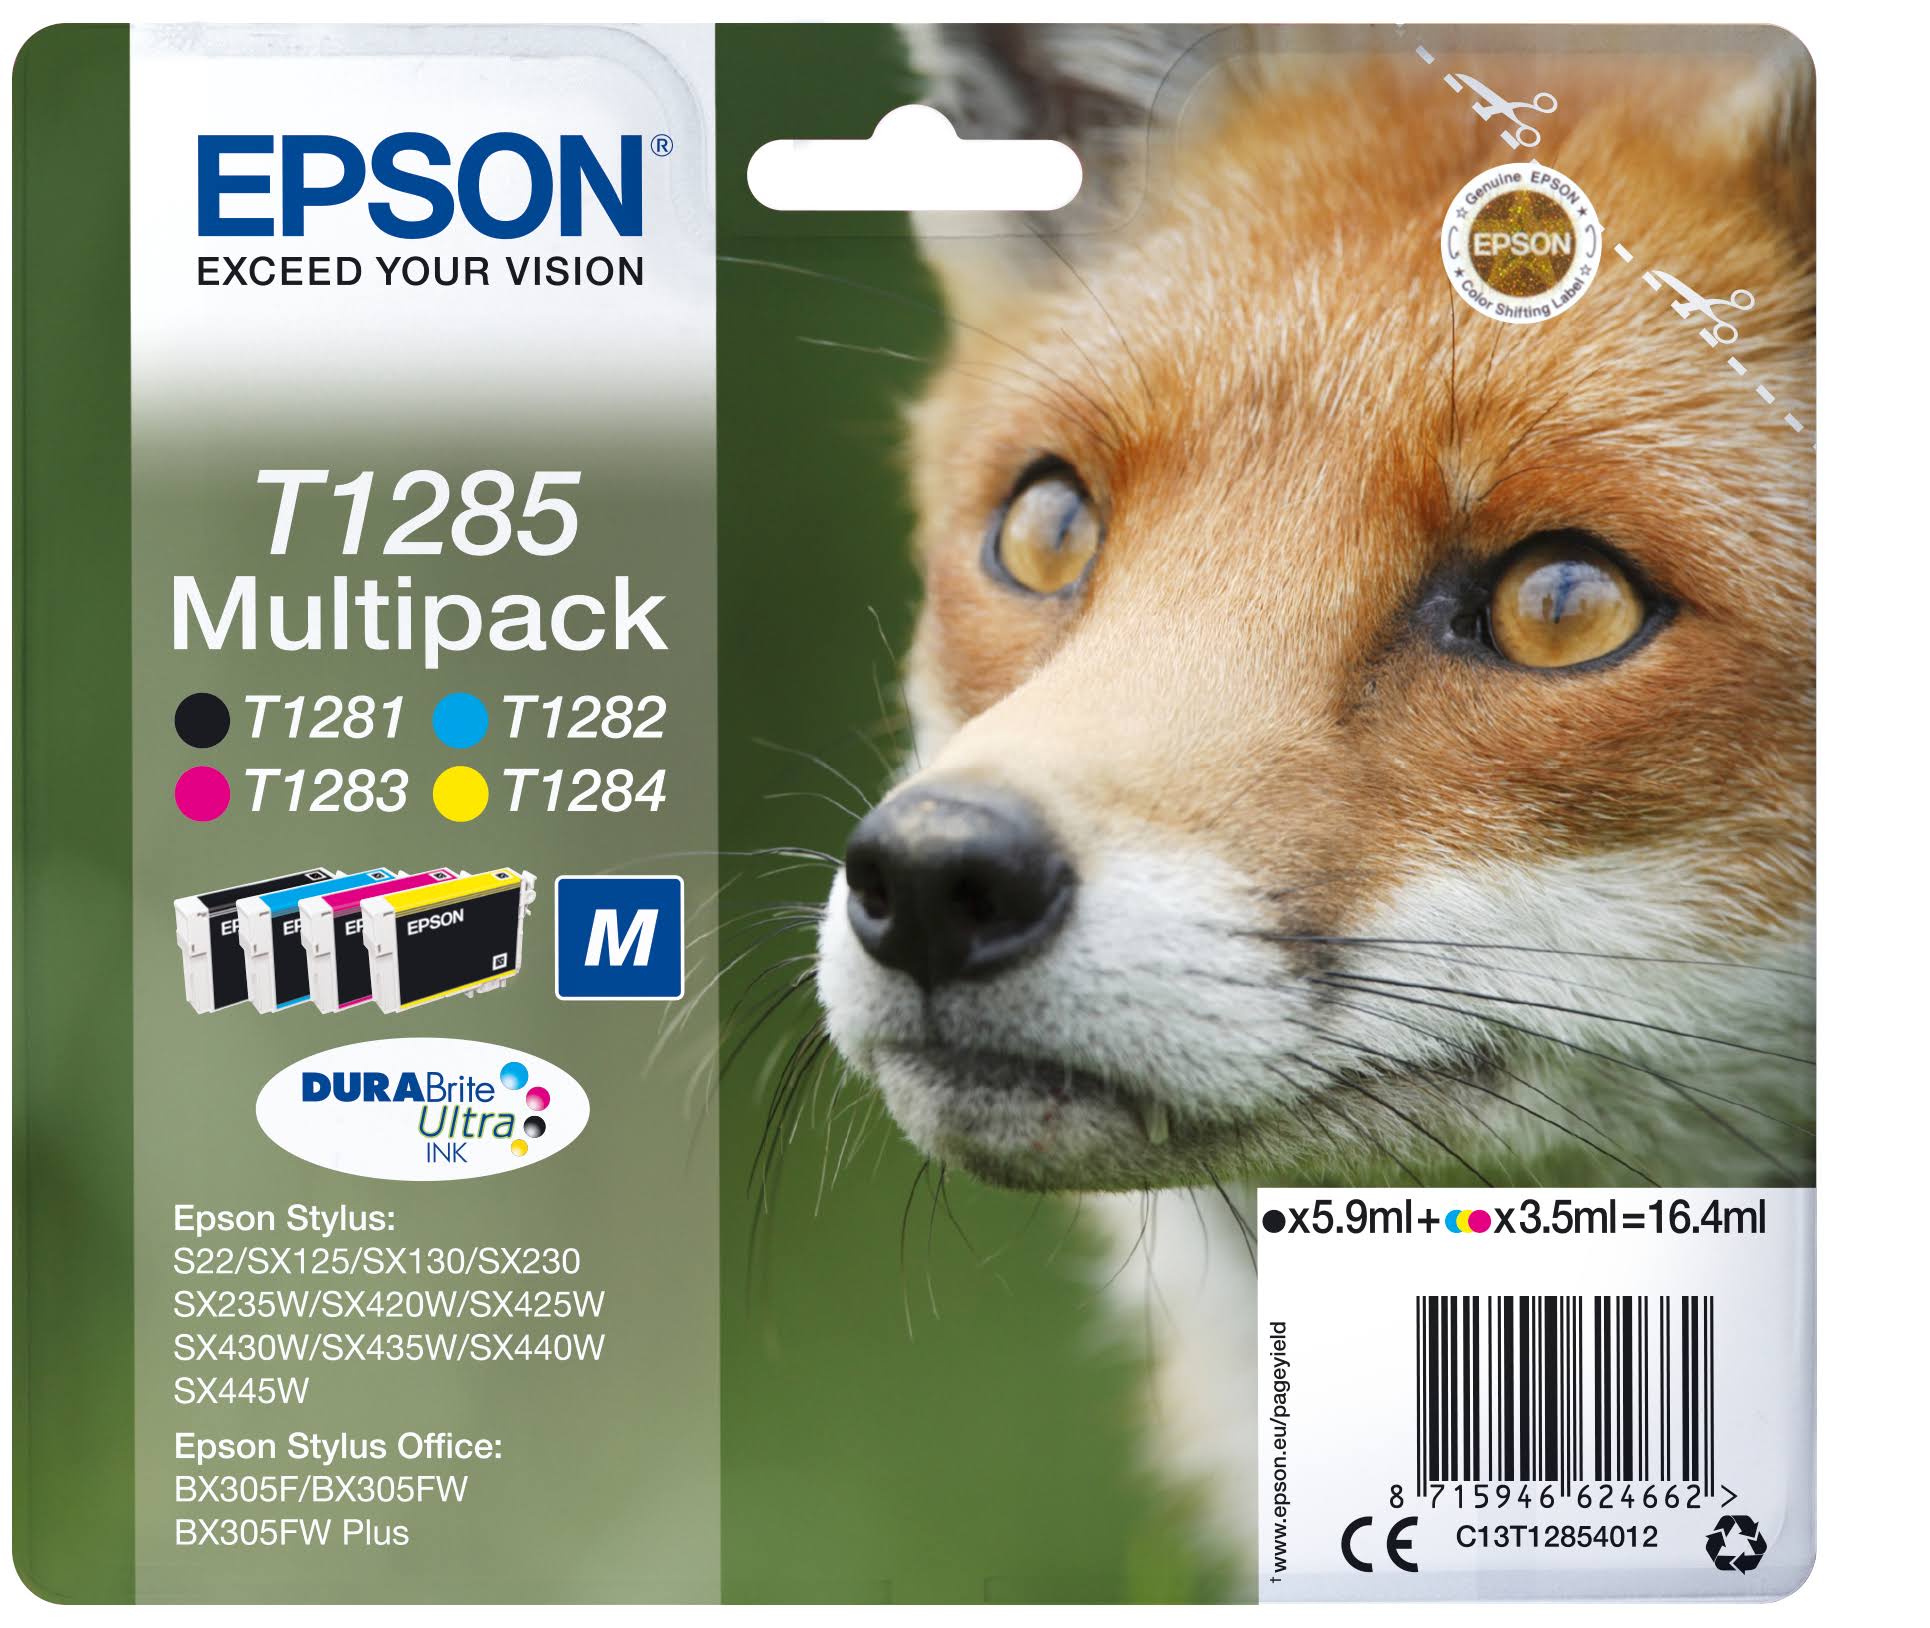 Epson T1285 Inkjet Cartridges - Multi Pack, Black, Cyan, Magenta and Yellow